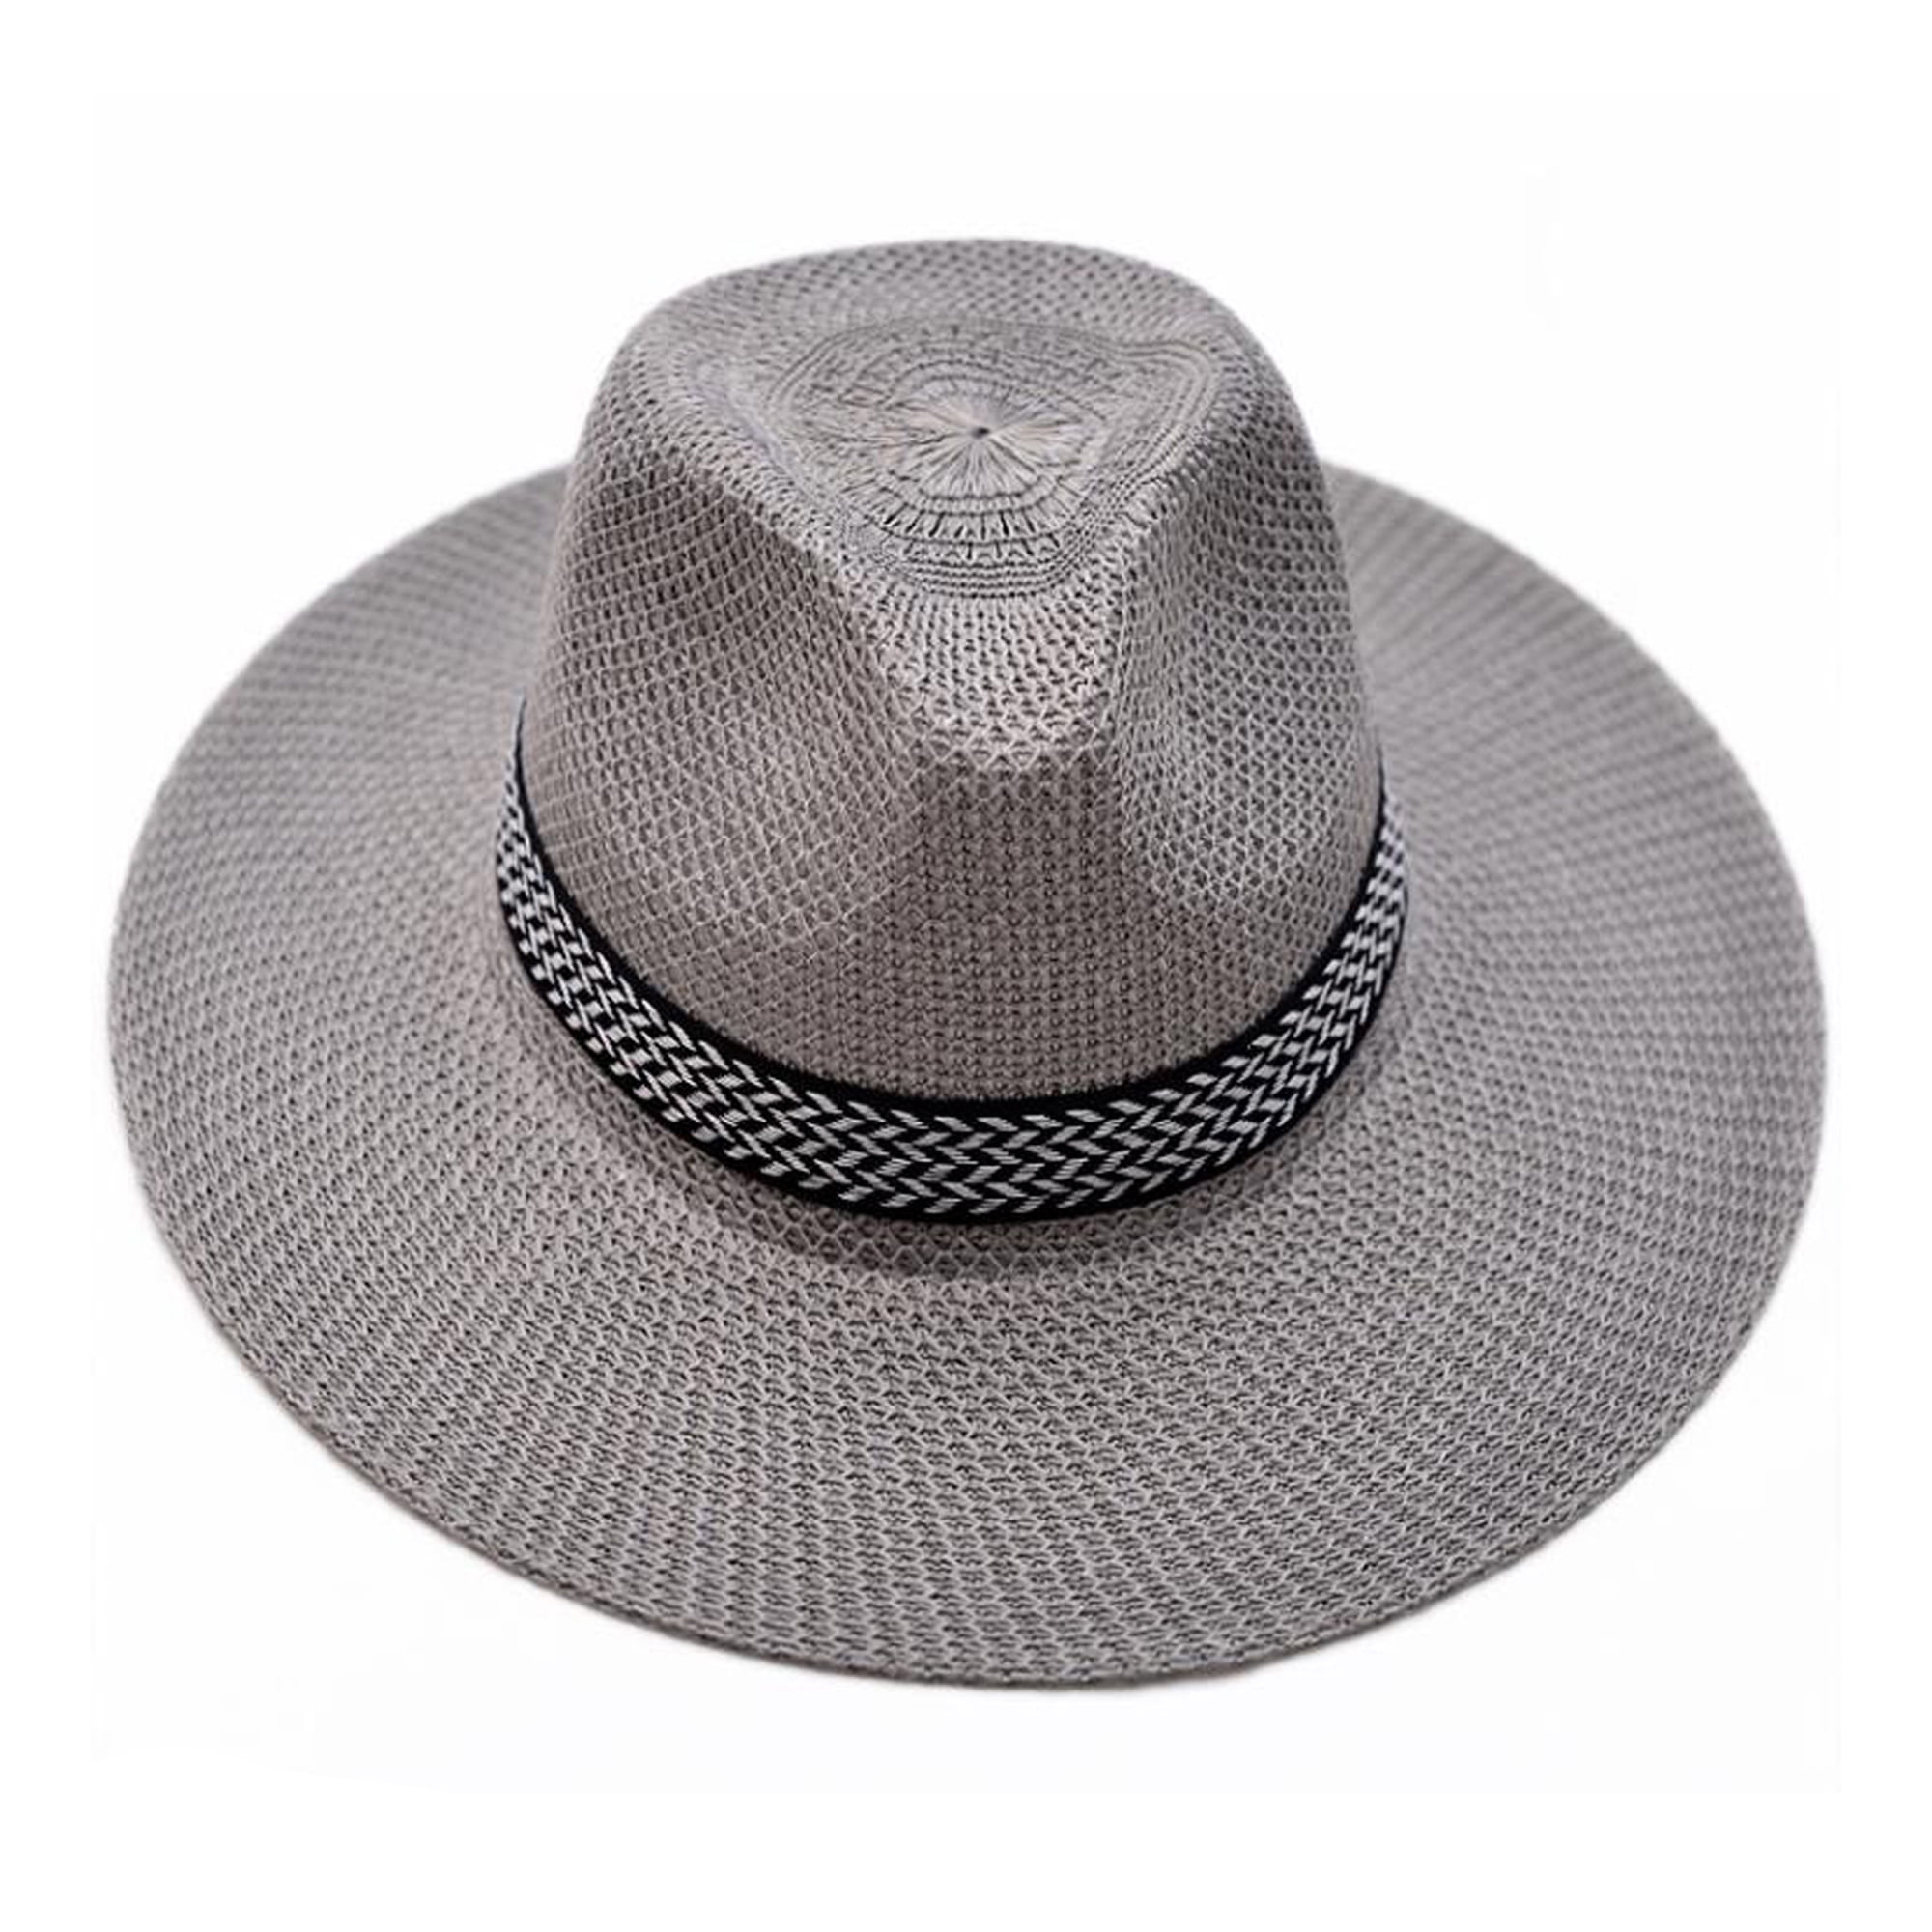 Gwiyeopda Mens Straw Panama Hats Sun Protection Summer Beach Straw Top ...